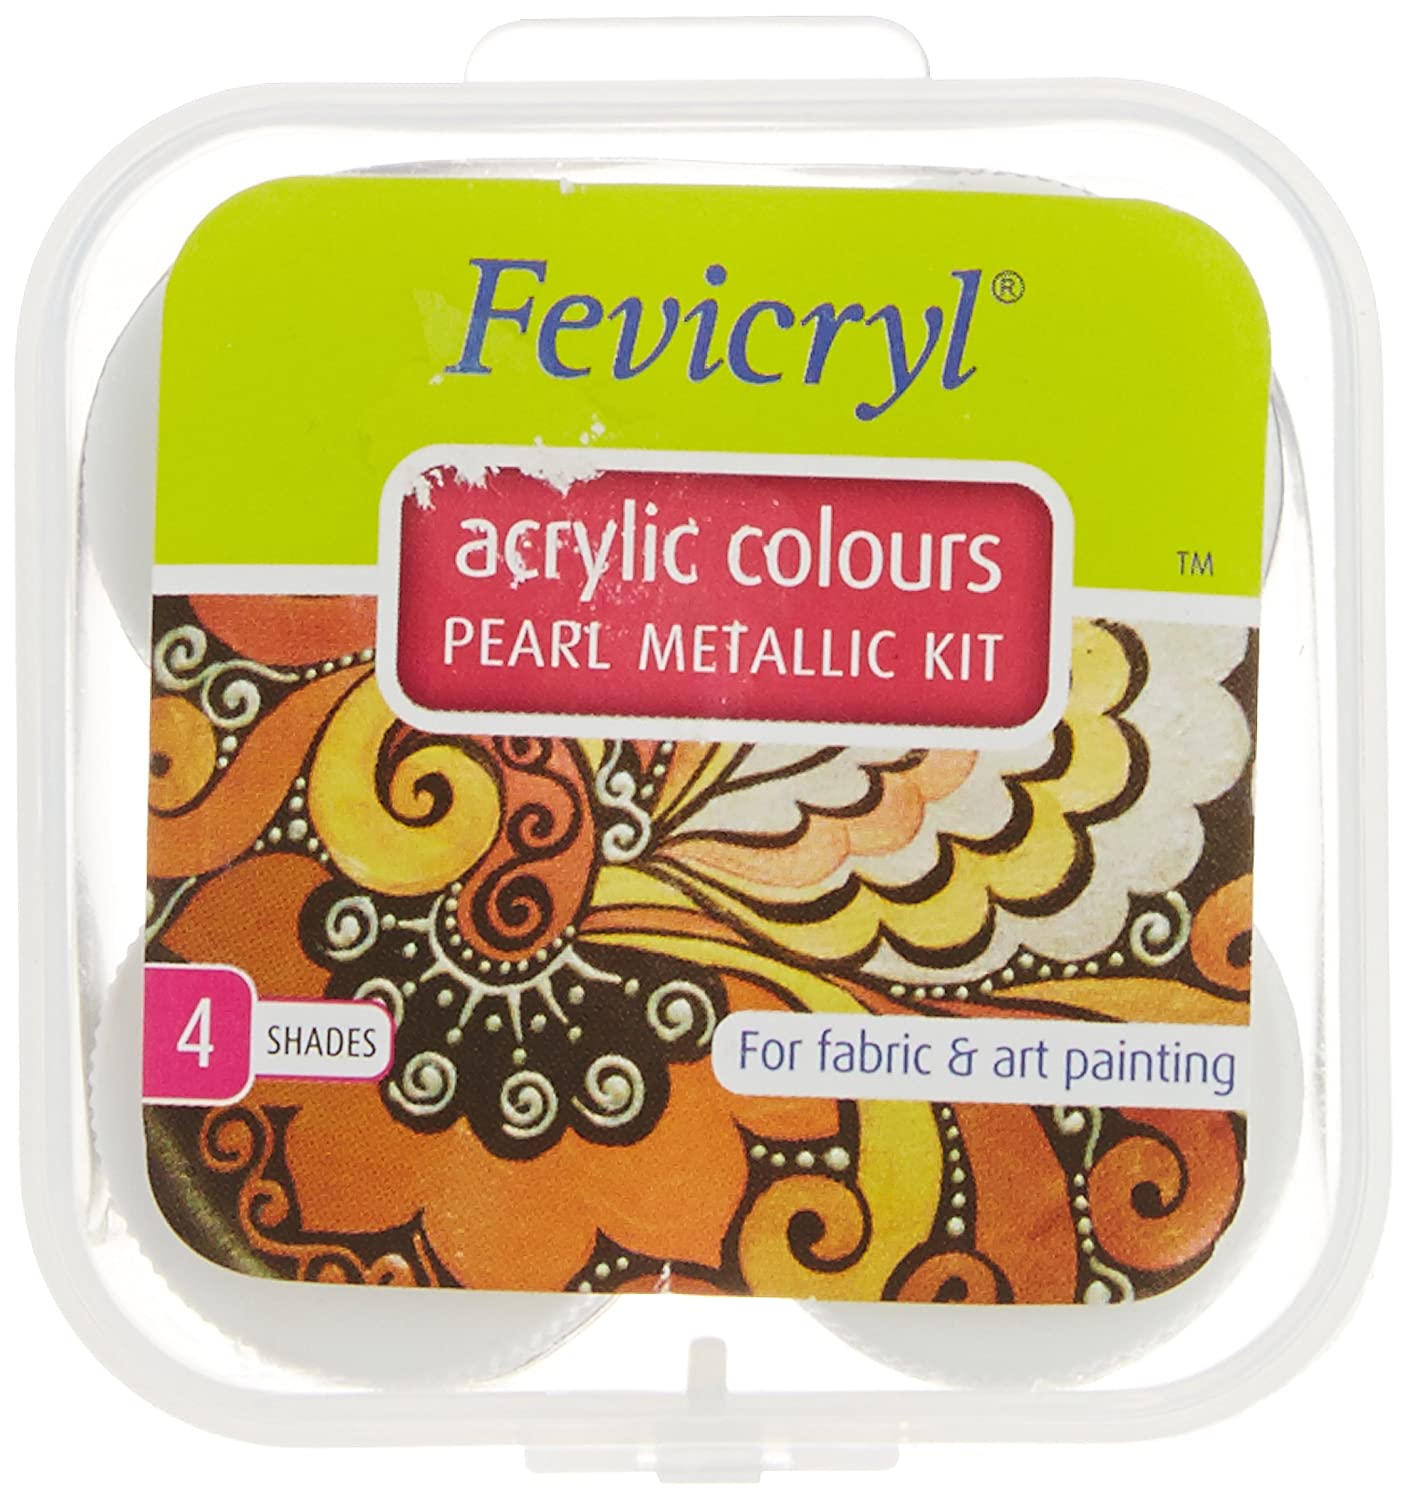 Fevicryl Acrylic Colors Pearl Metallic Kit, 40ml, 4 Shades